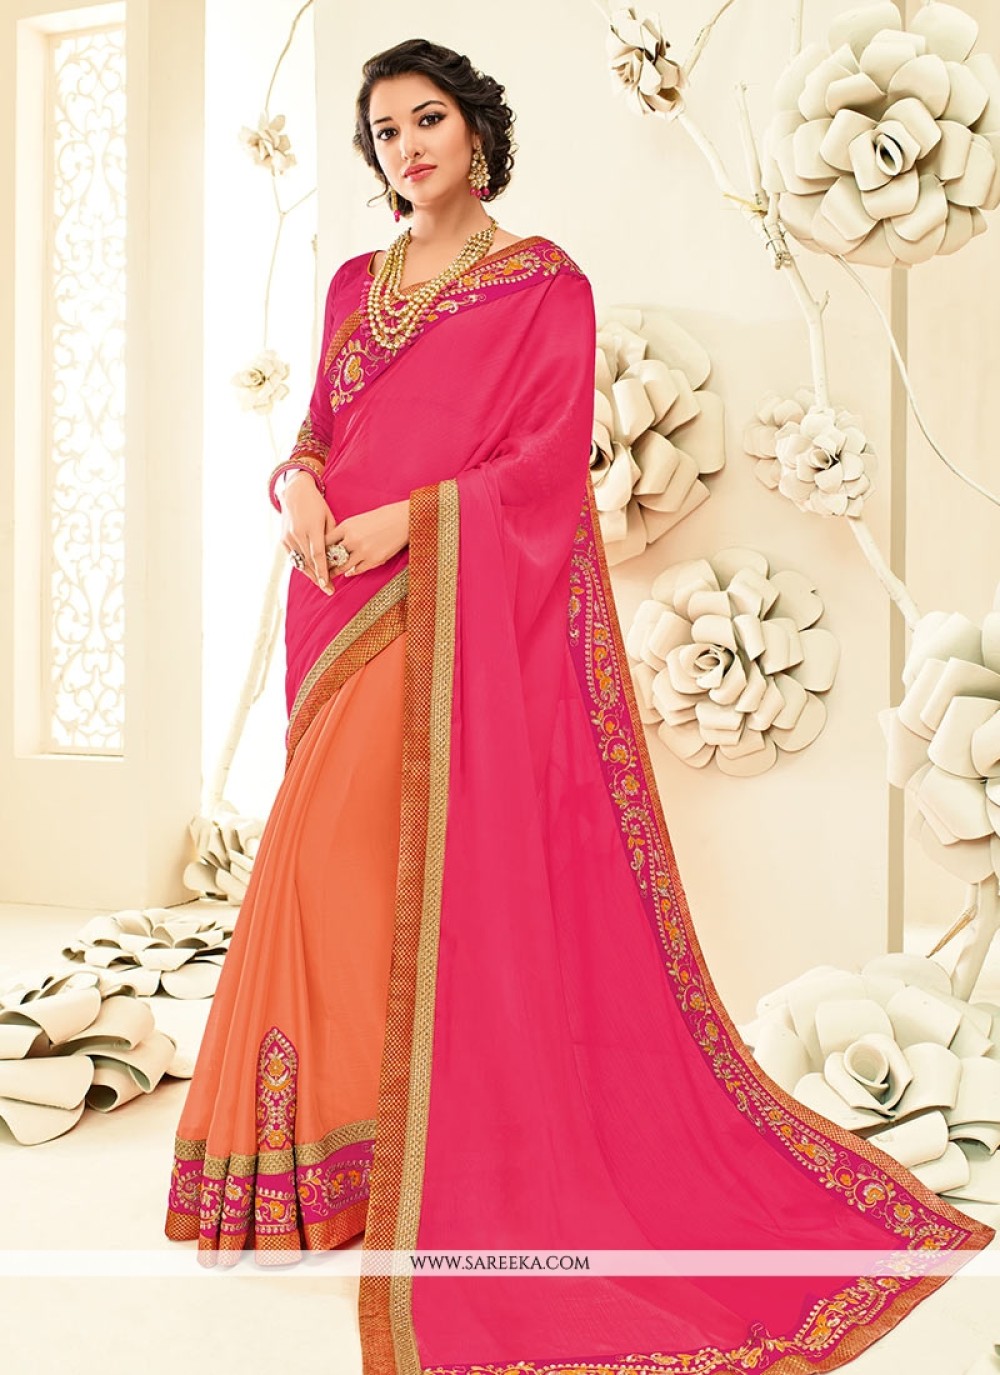 Patch Border Faux Chiffon Designer Half N Half Saree in Hot Pink and Orange